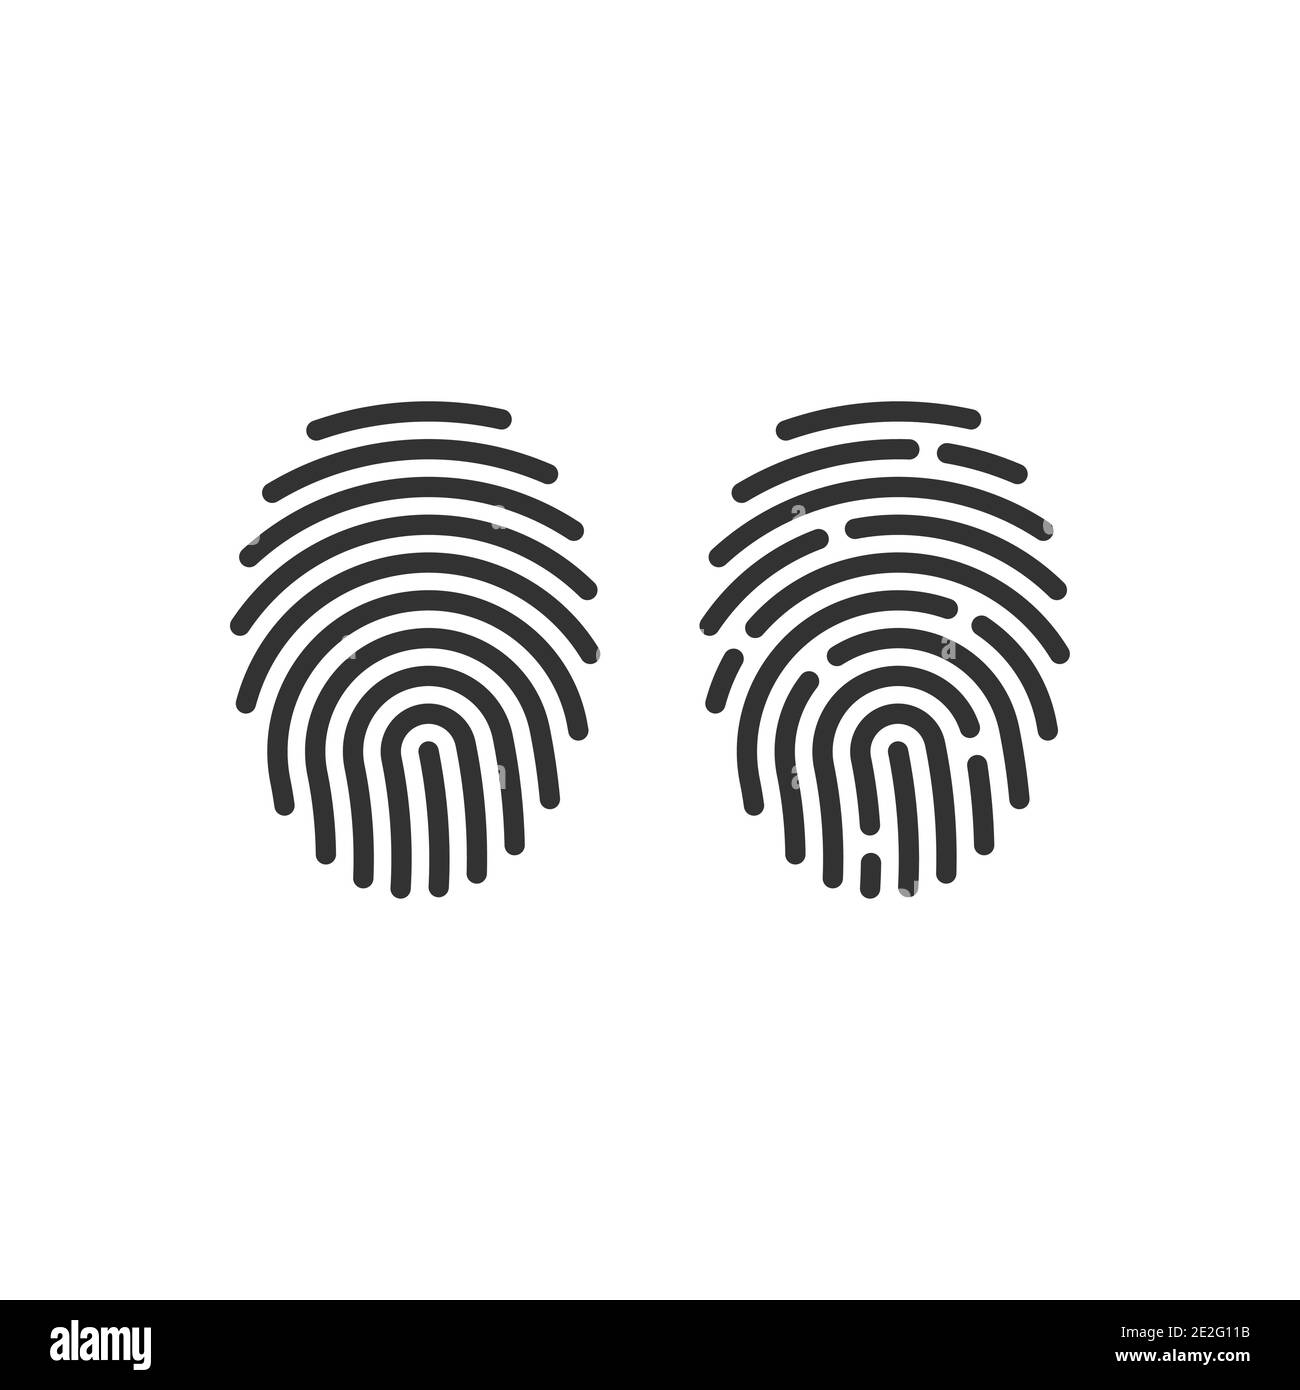 Biometrische, schwarz, Kriminalität, Finger, Fingerabdruck, Glyphe, Hand, Mensch, Symbol, id, Identifikation, Identität, Menschen, Piktogramm, Piktogramm, Druck, Privatsphäre, s Stock Vektor